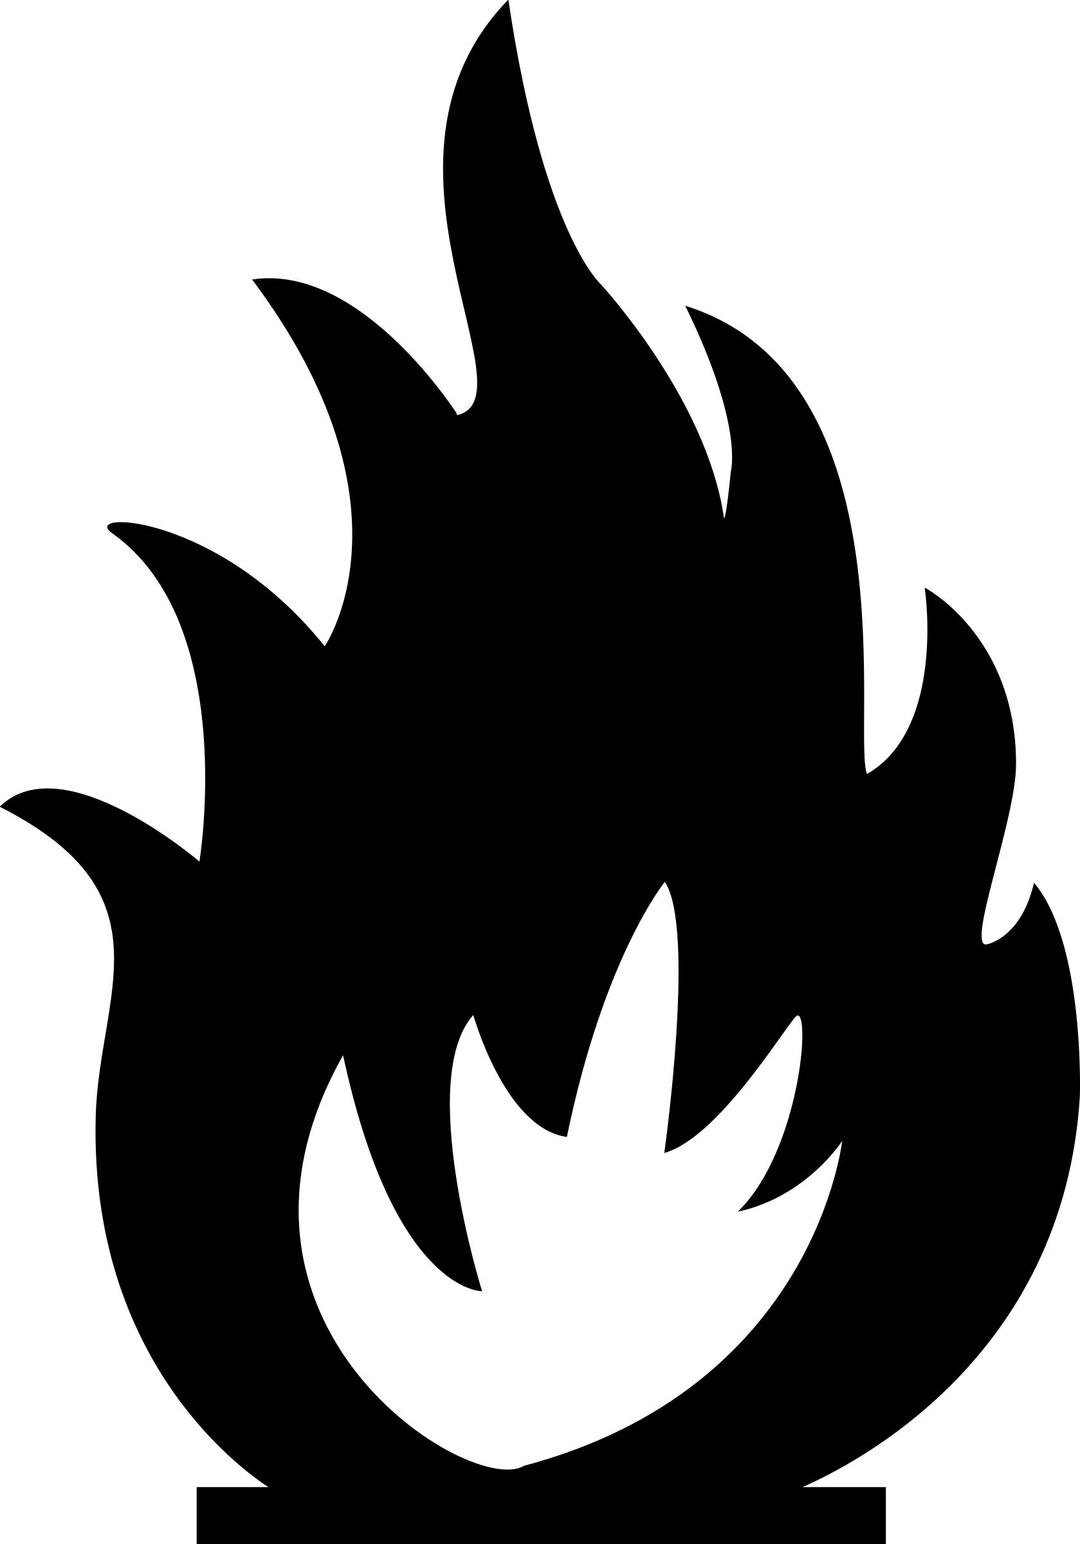 Fire warning symbol png transparent